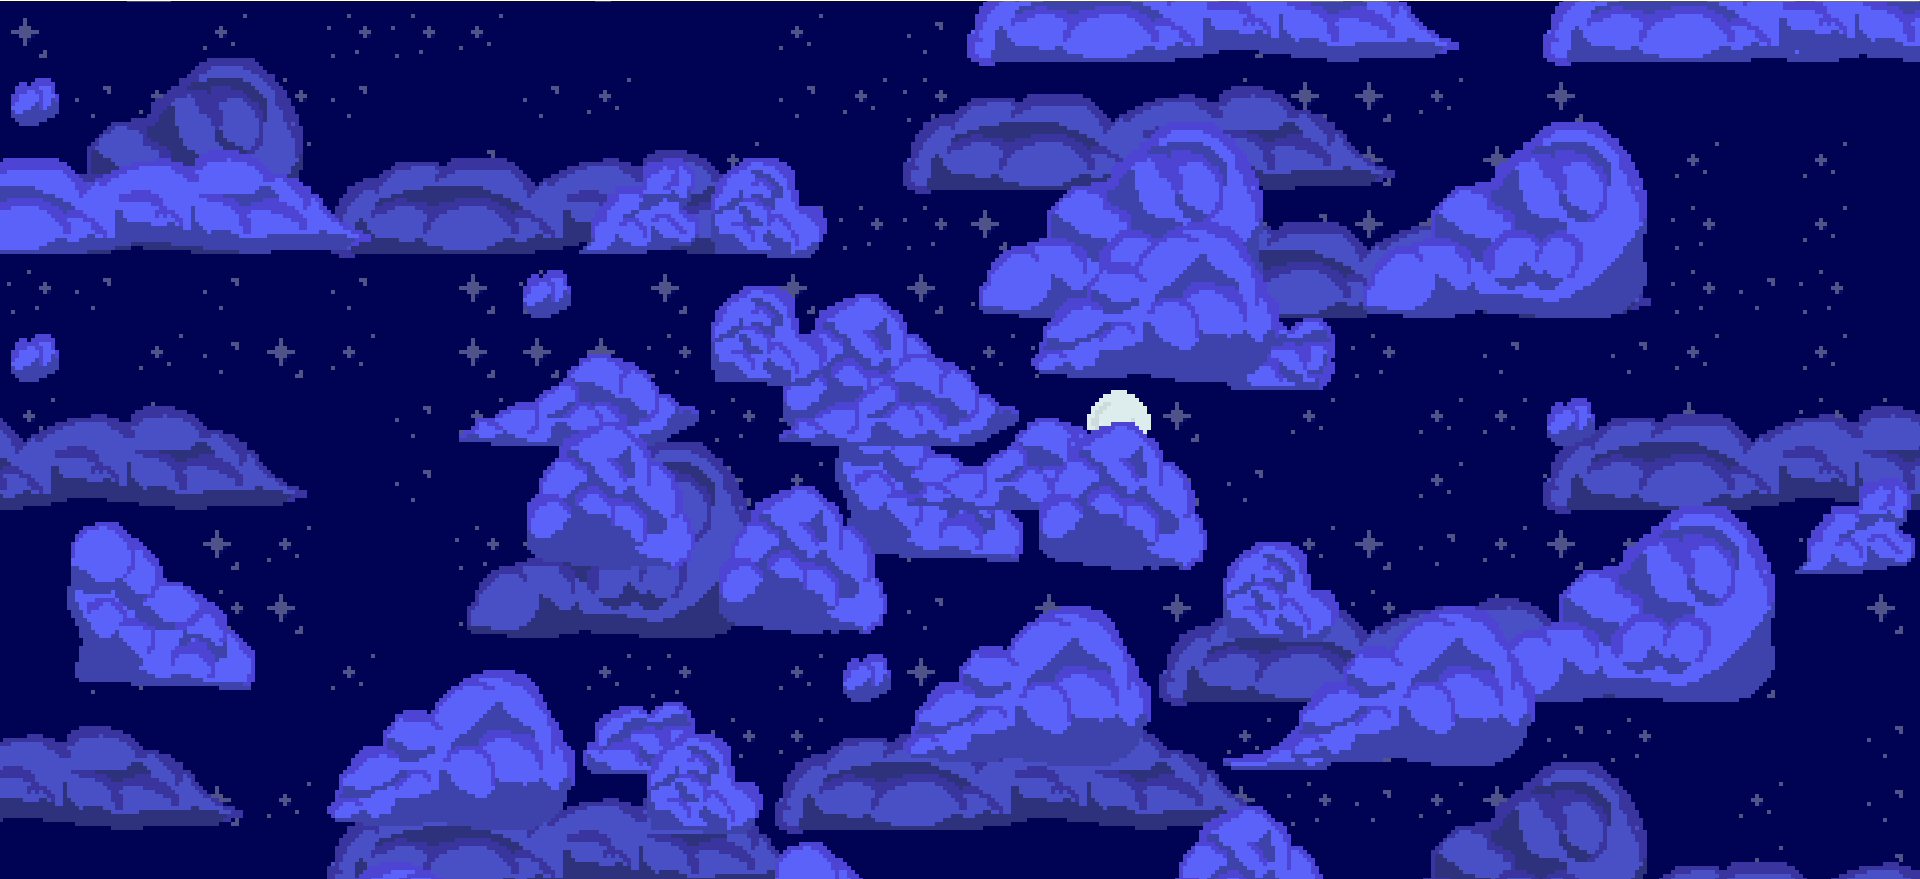 clouds ( night sky tile map )